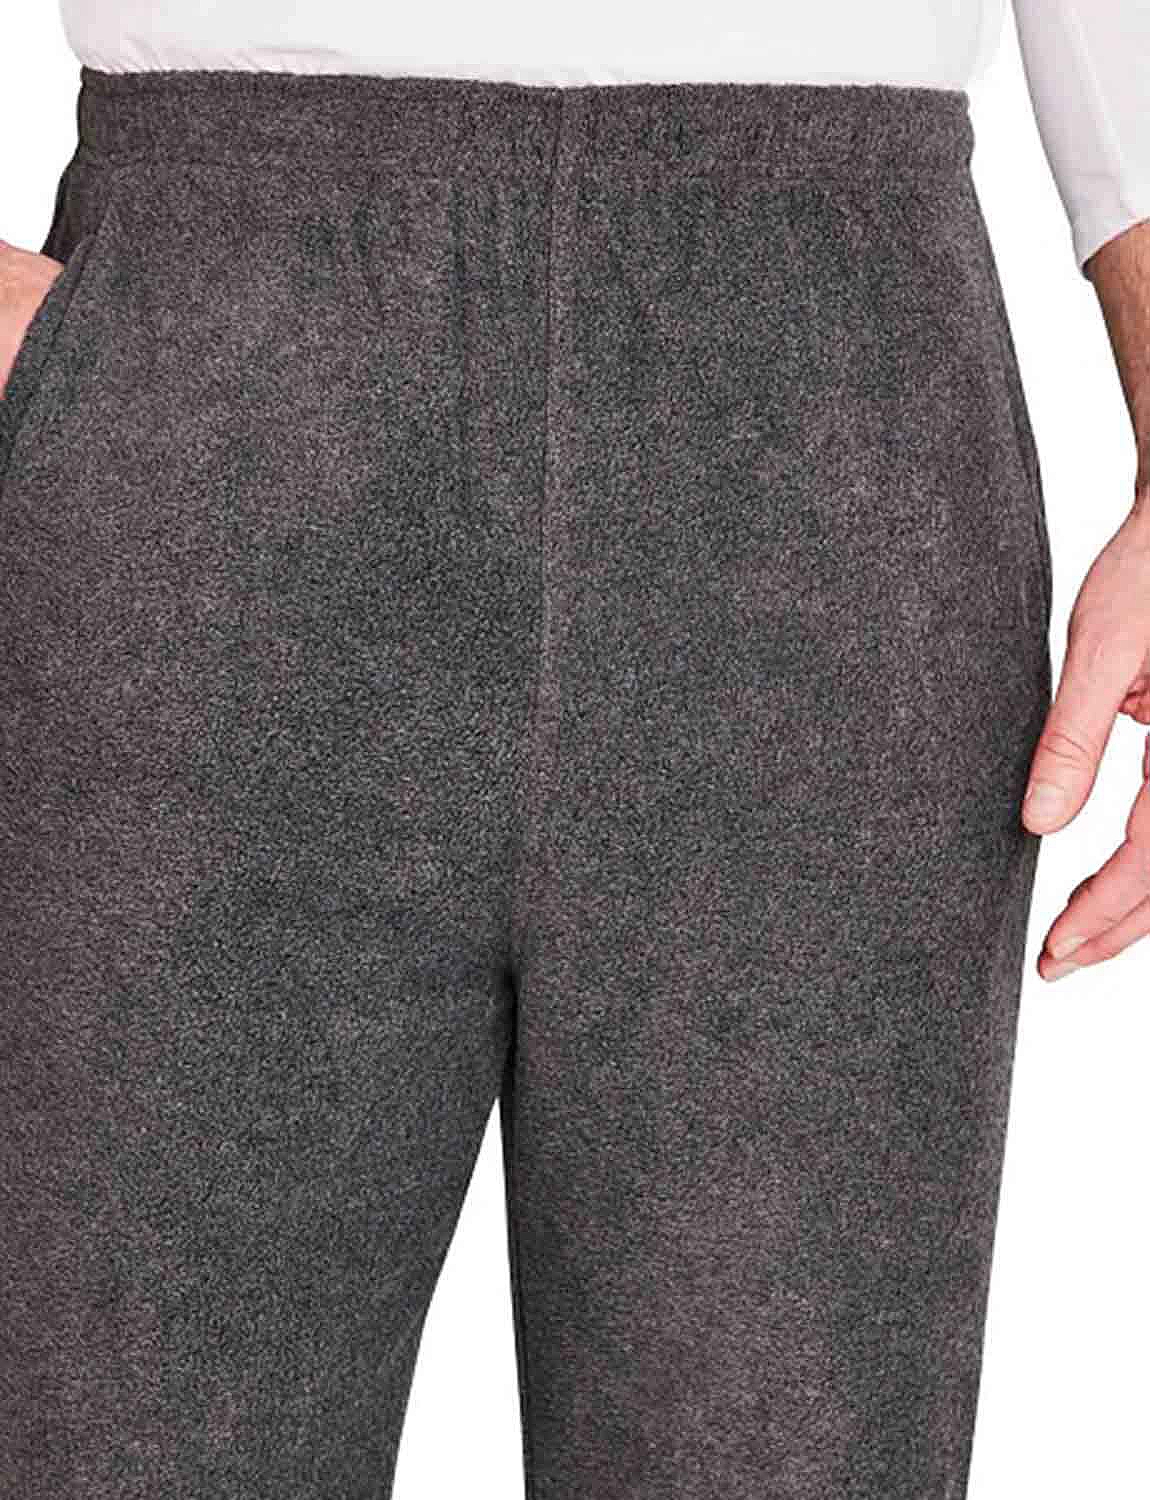 Chums Mens Elasticated Fleece Leisure Jogging Trouser Pants 